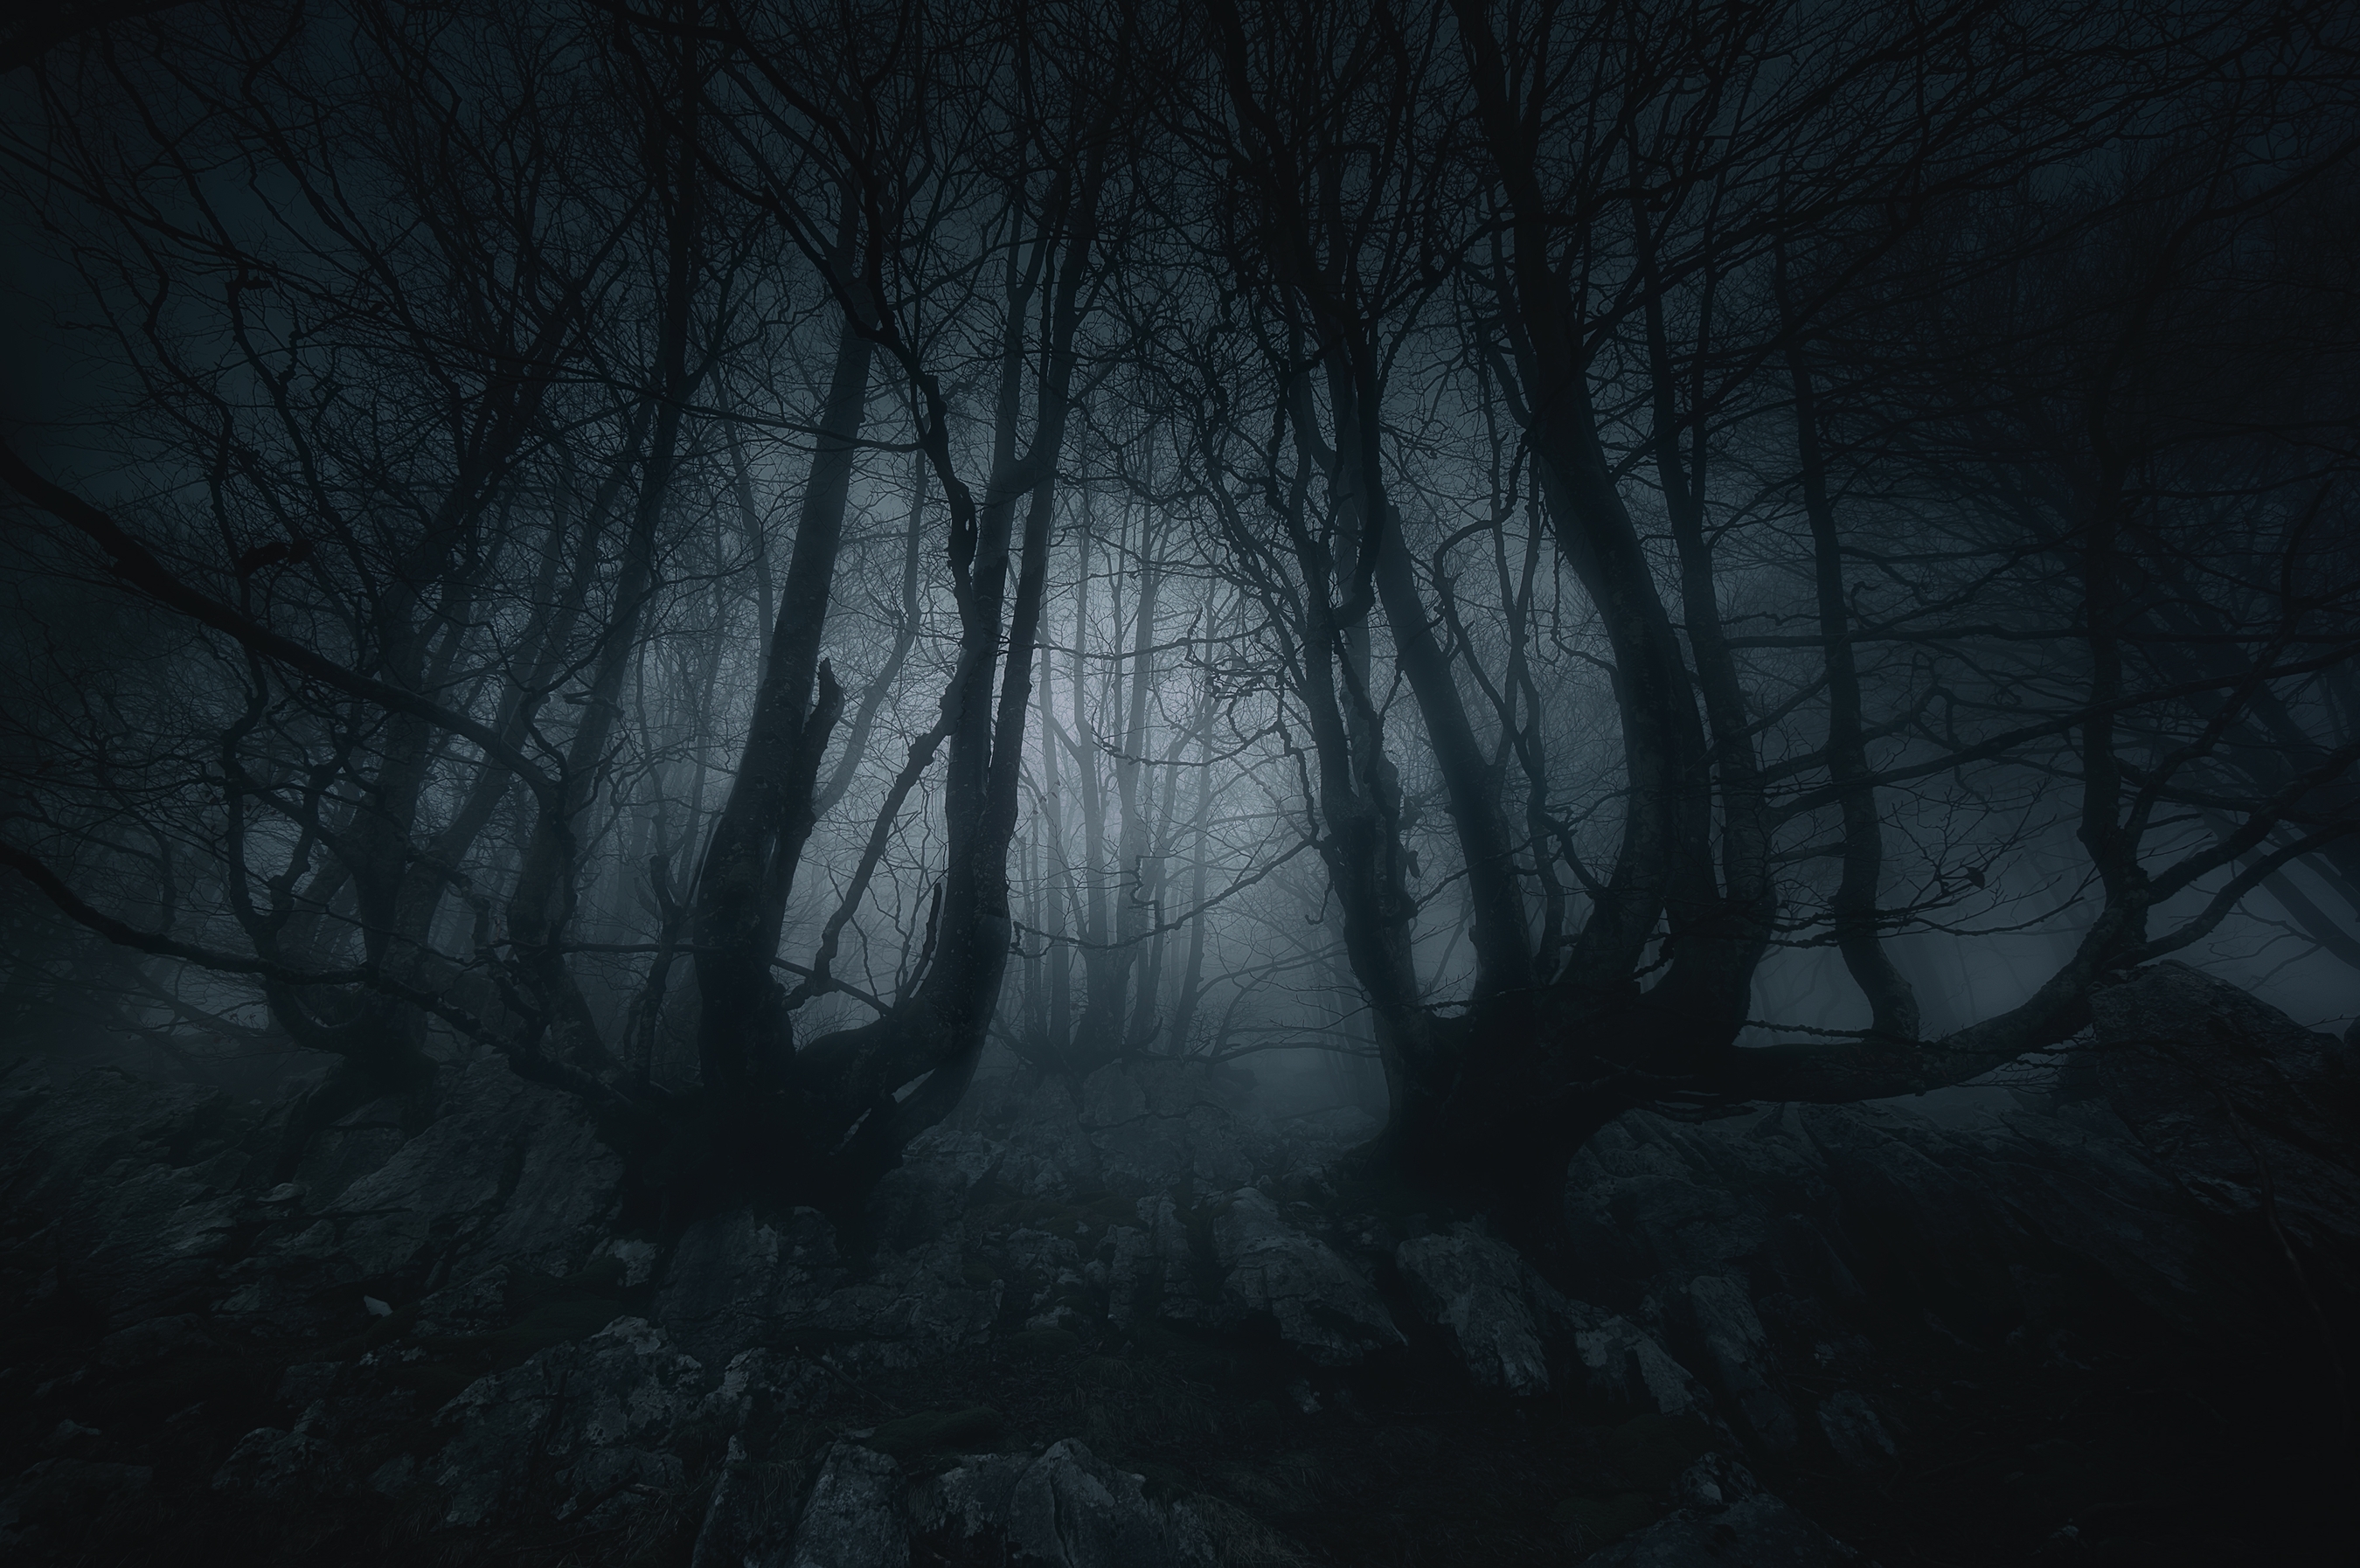 079713130-nightmare-forest-creepy-treesjpeg